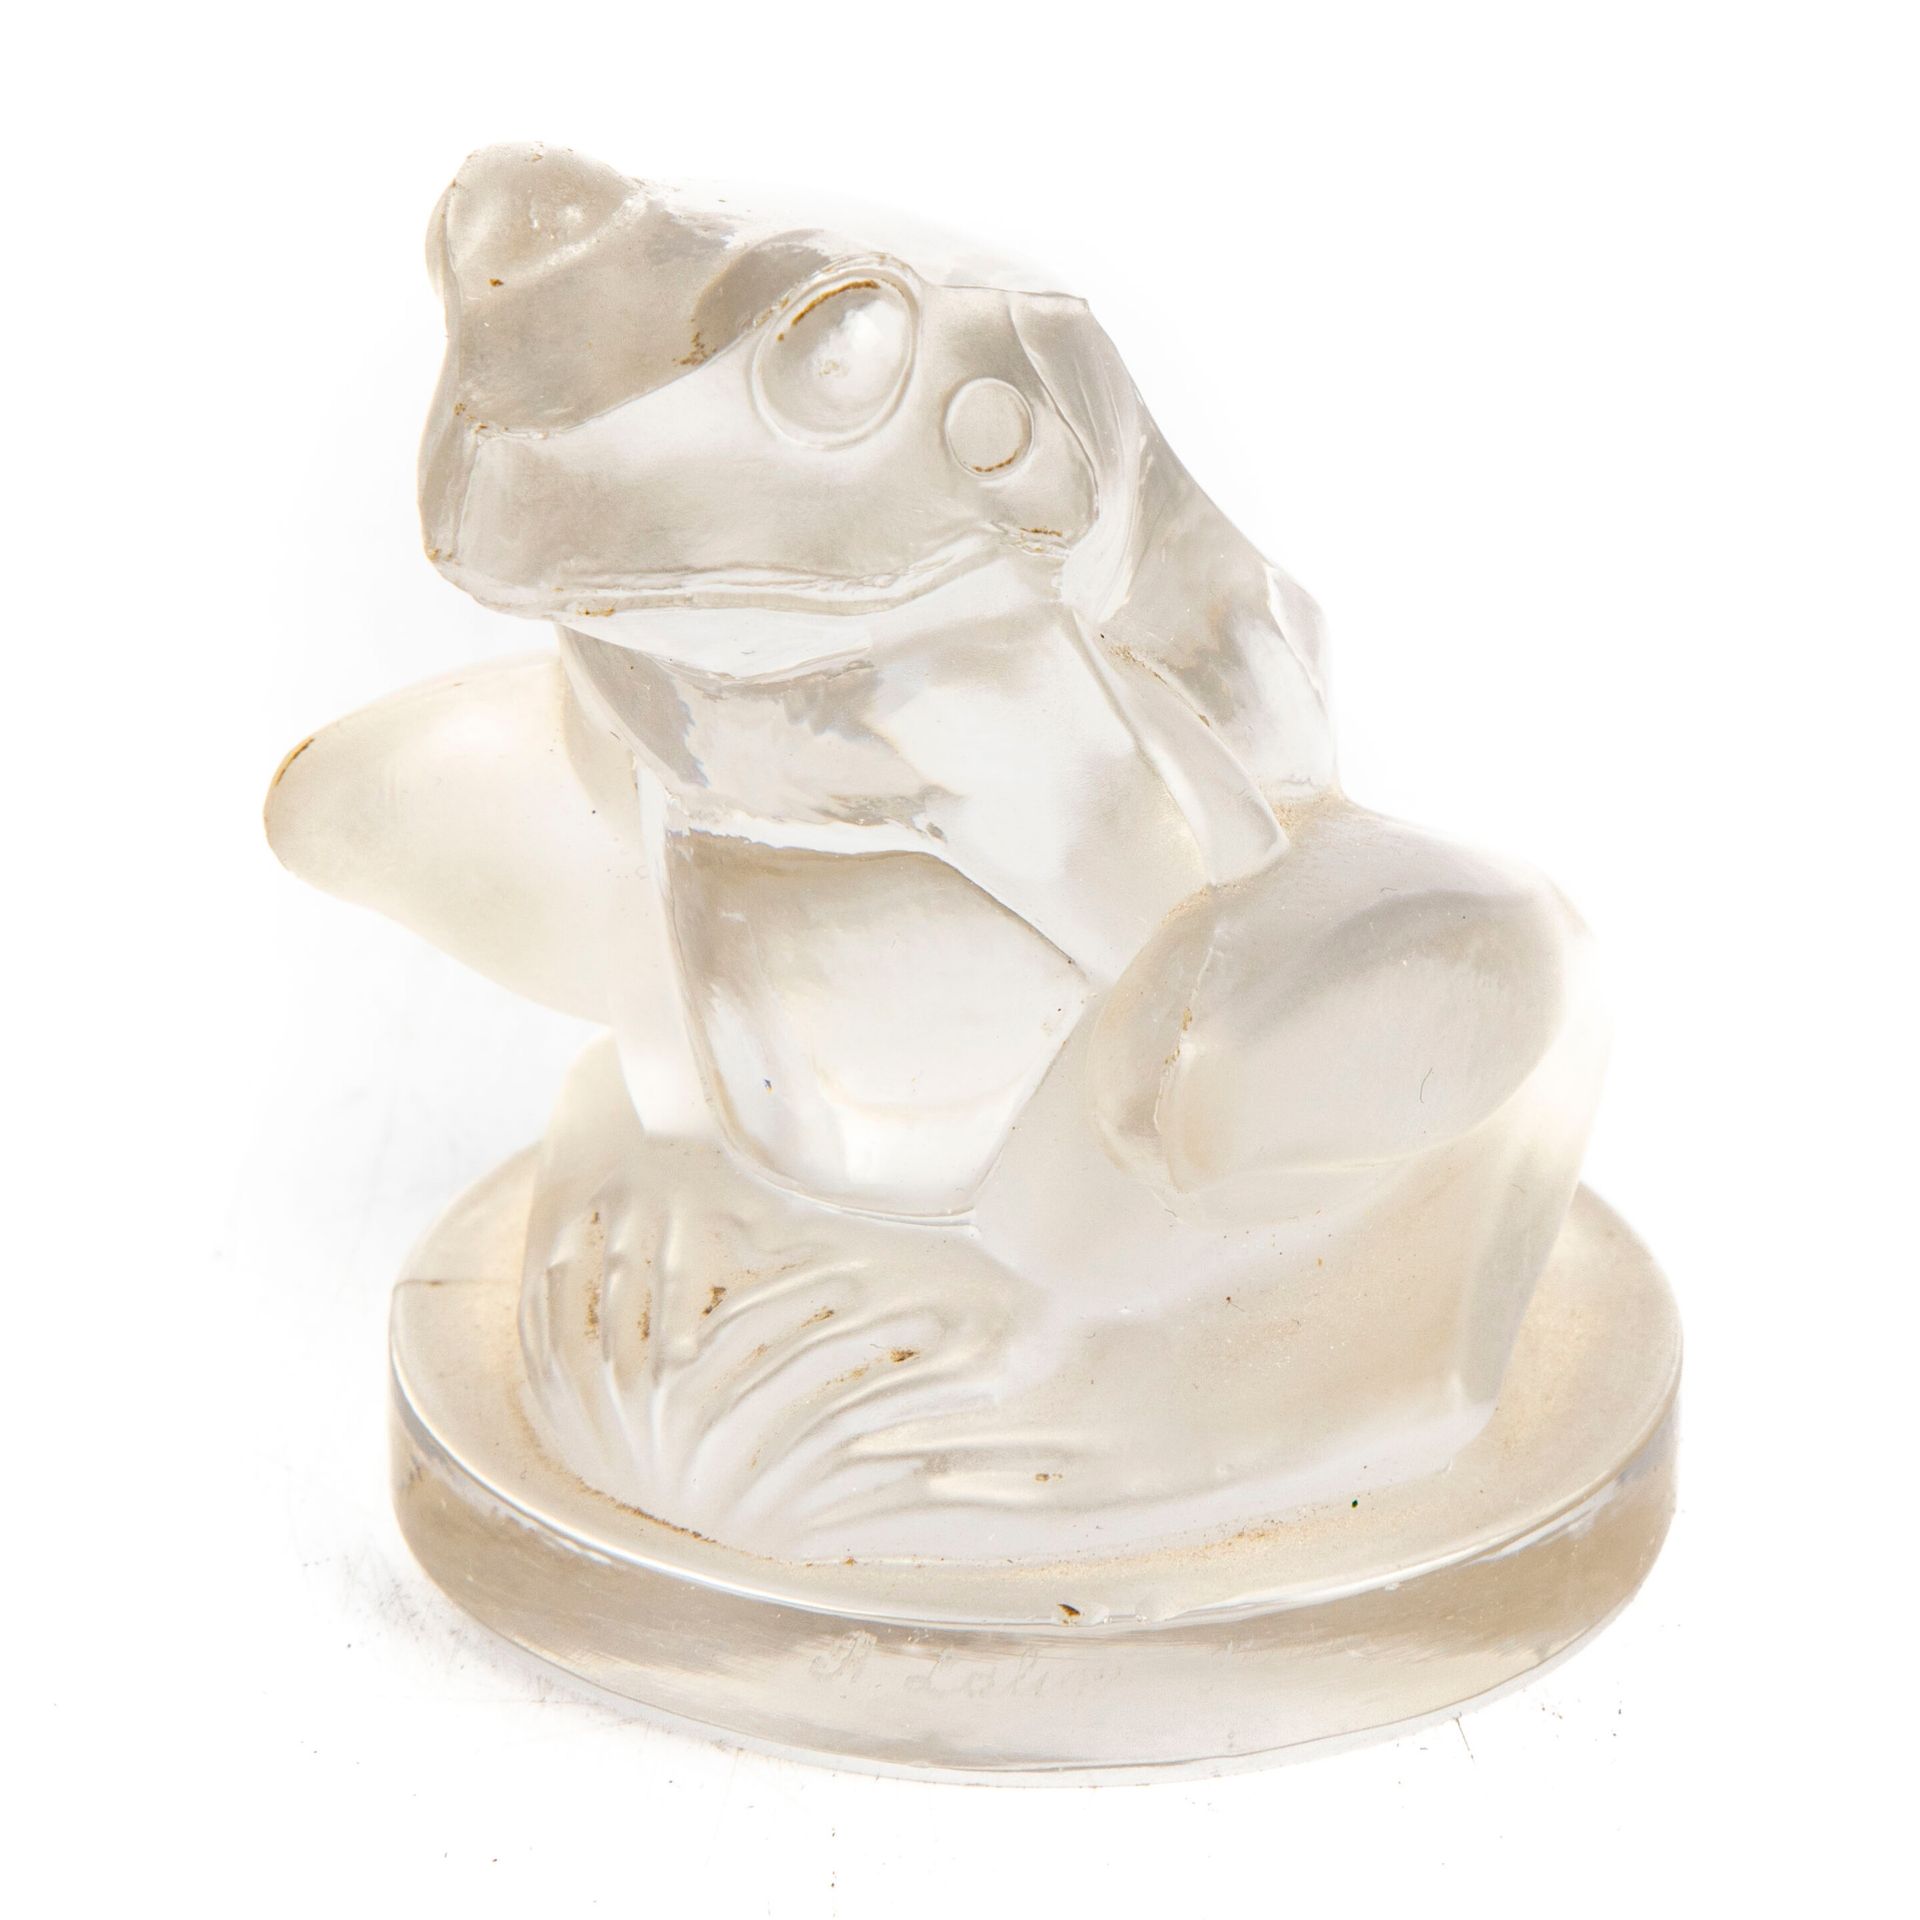 René LALIQUE 勒内-拉里克 (1860-1945)

青蛙吉祥物版本

白色压制玻璃，缎面和光面处理，签名为R.Lalique France，质量上&hellip;